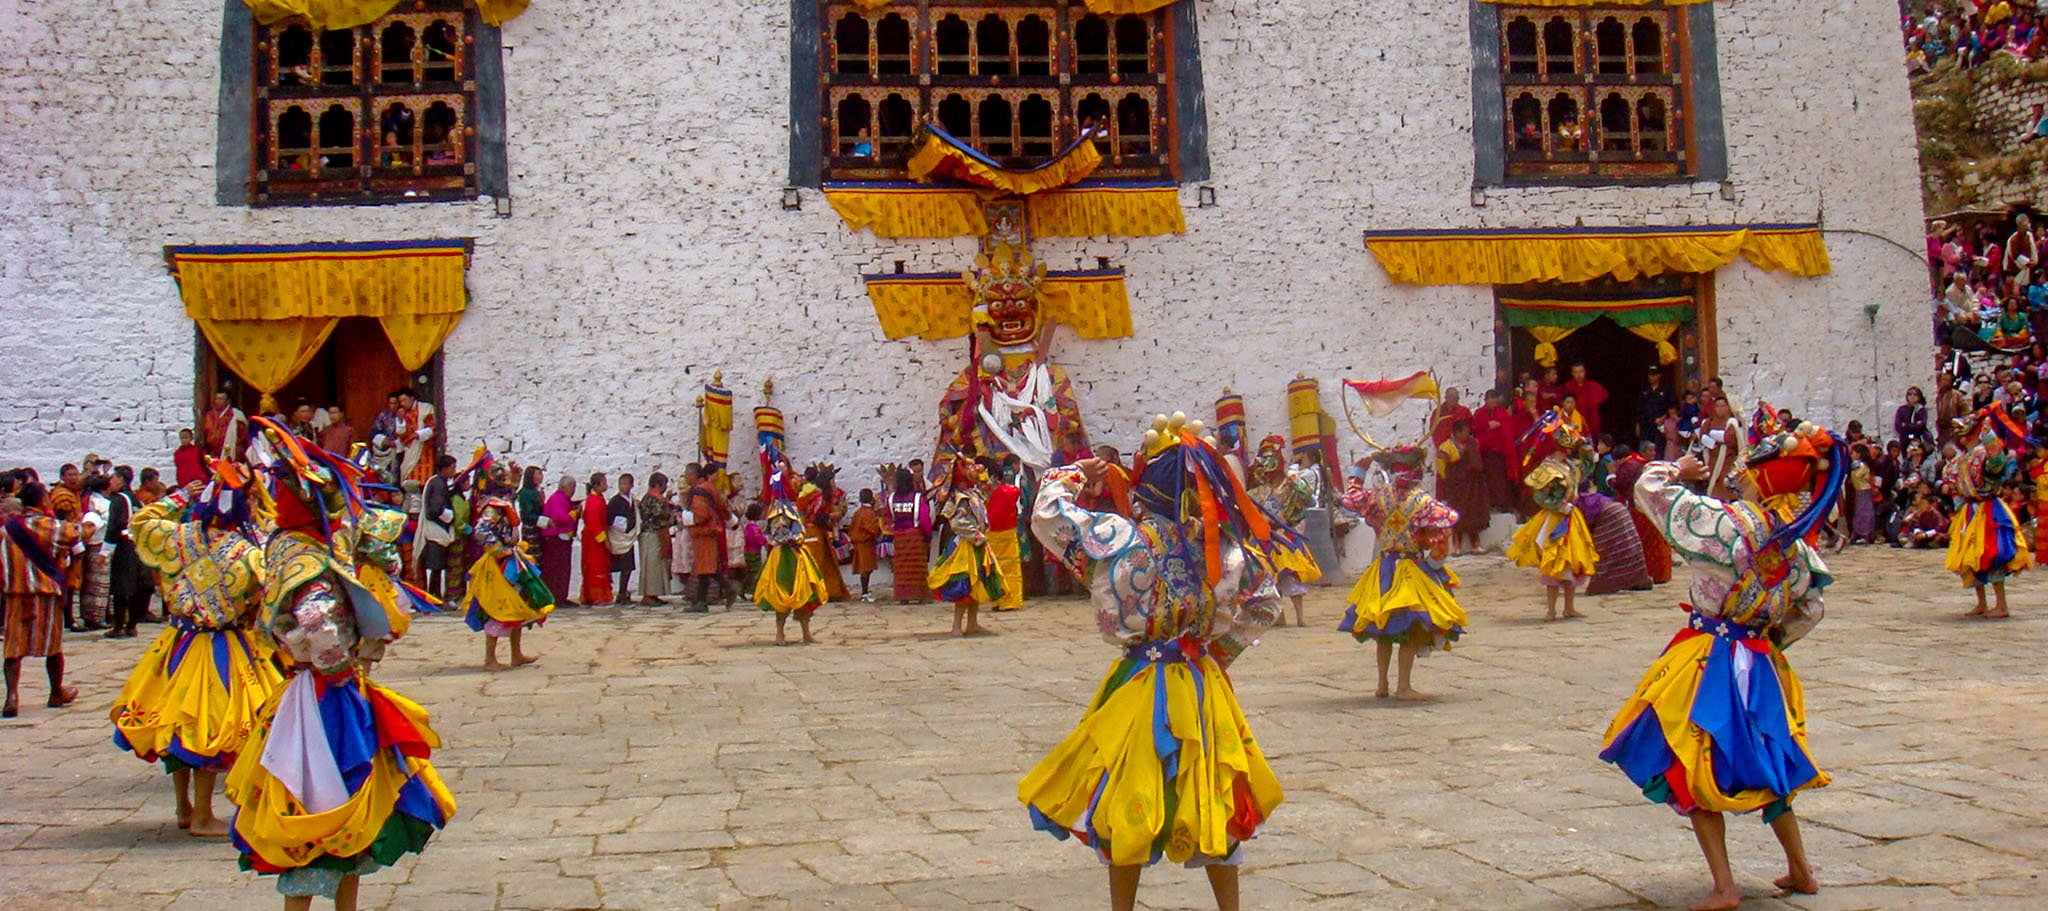 Tour In Bhutan